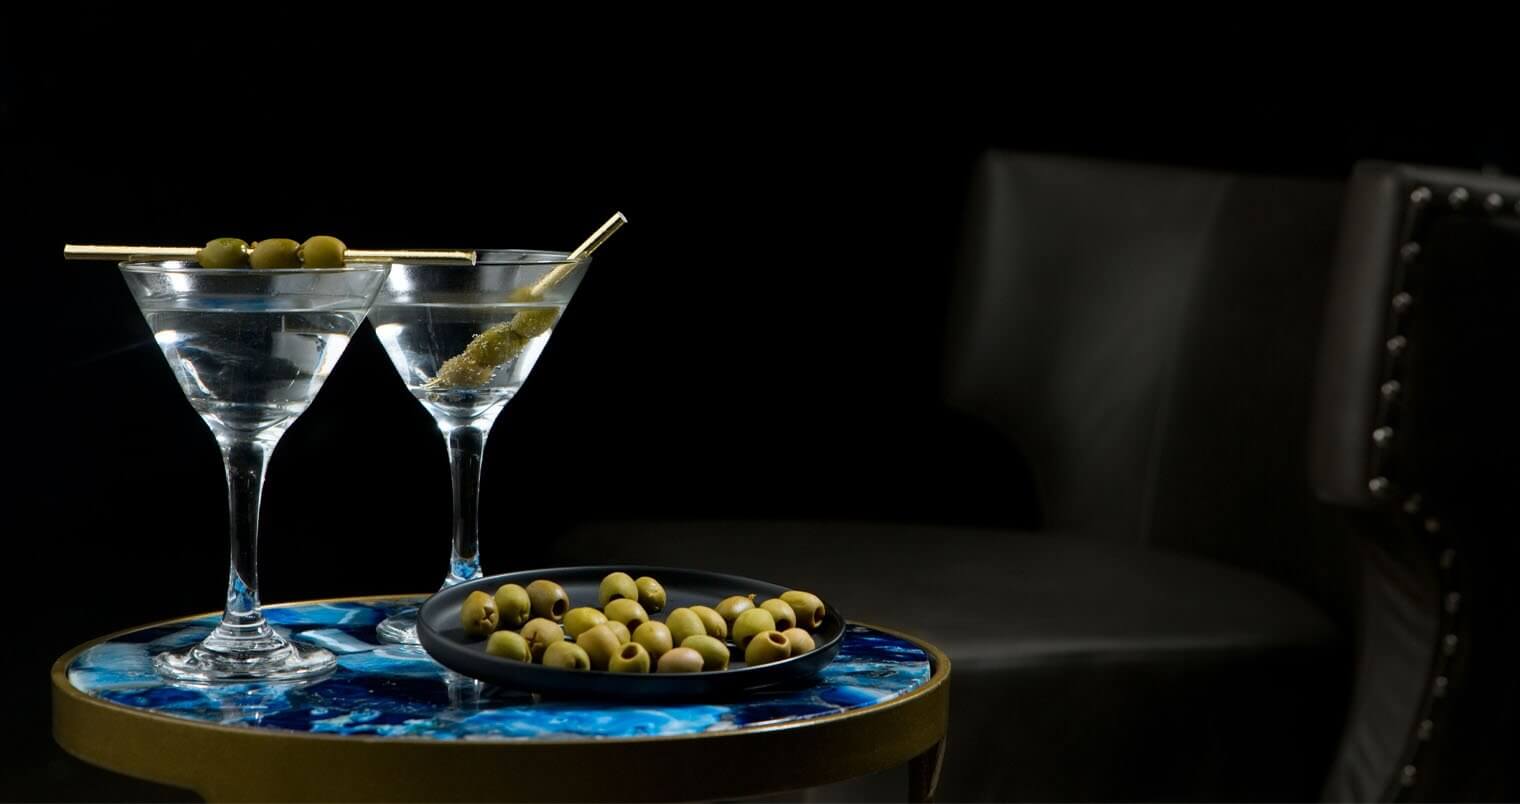 Minimalist Cocktails Image by Aditya Saxena featured image